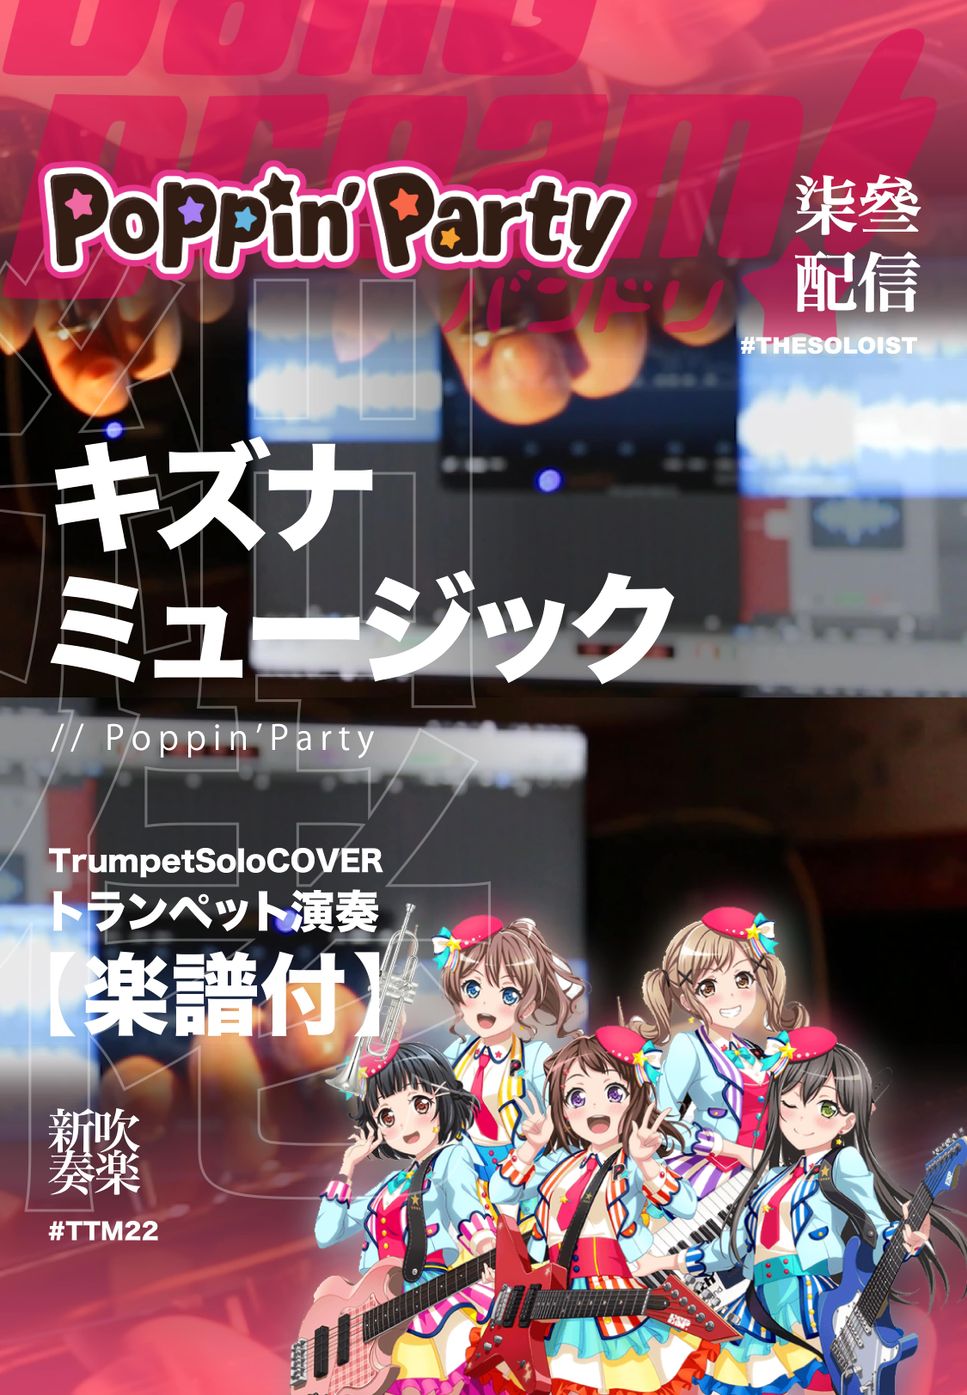 Poppin'Party - 少女樂團派對 - 絆 (小號演奏) by LITTLEBROTHER Kel.L